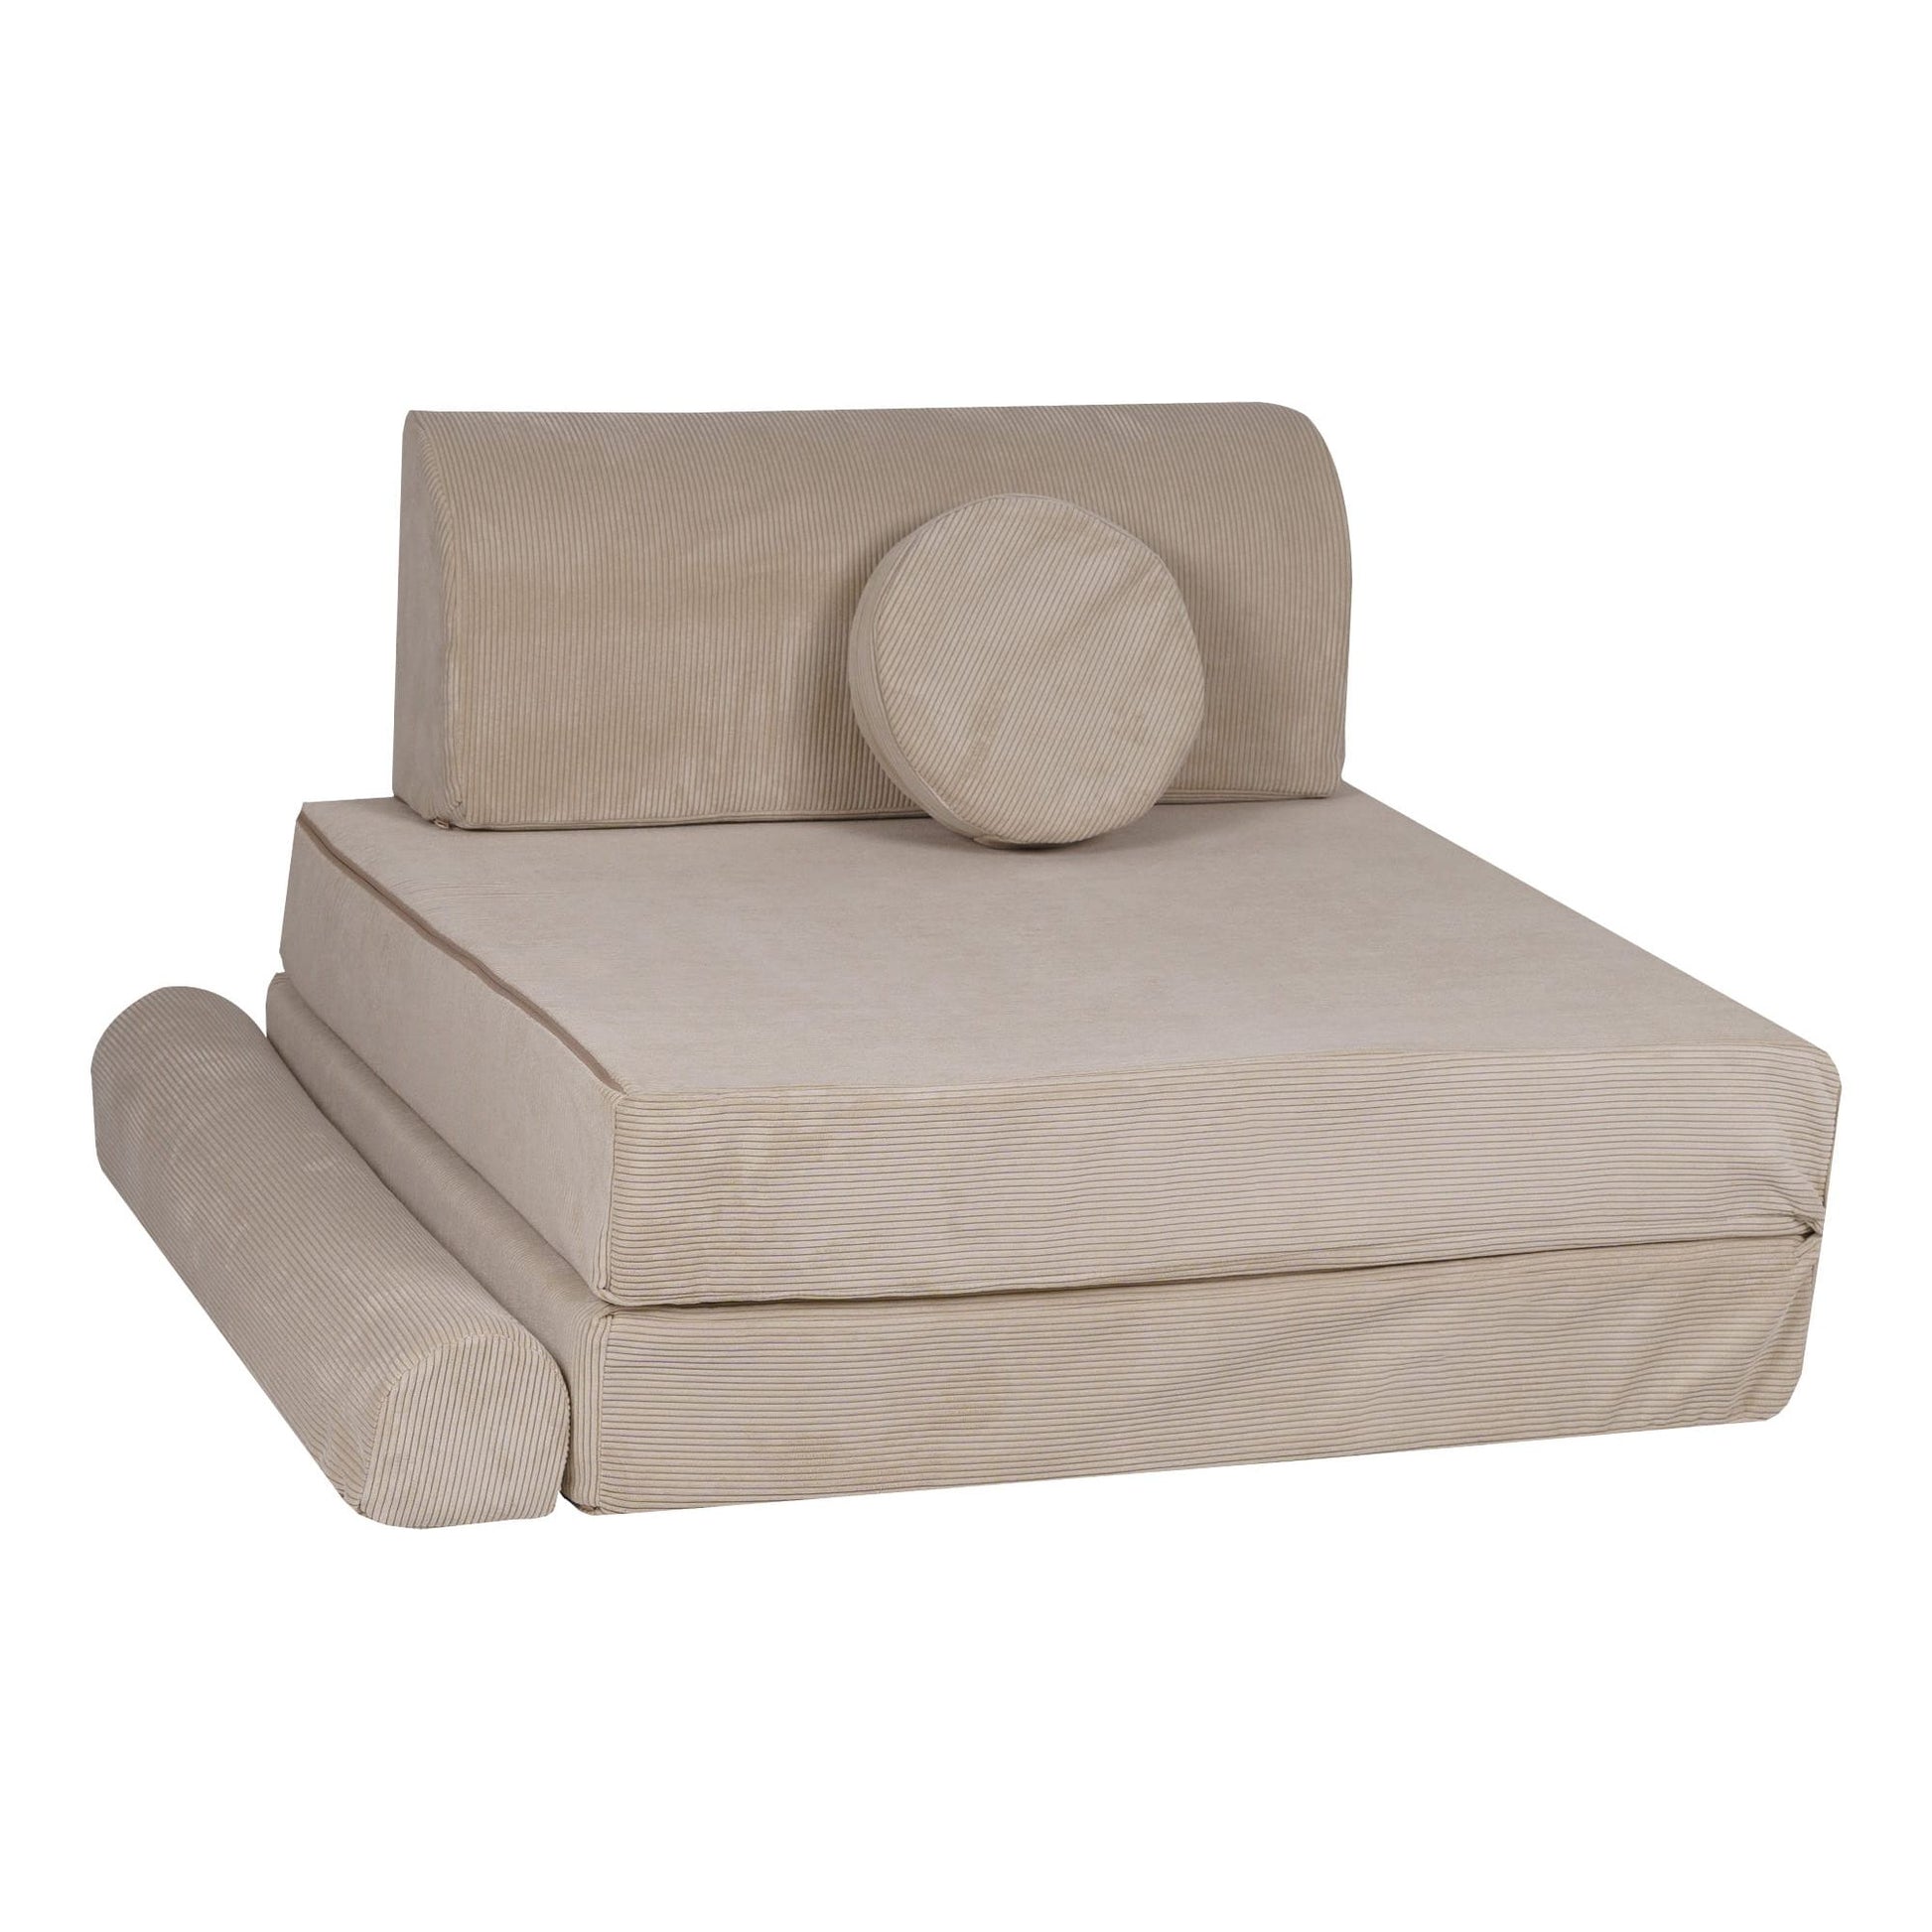 MeowBaby Kids Soft Play Sofa & Fold Out Bed - Corduroy Ecru single seat